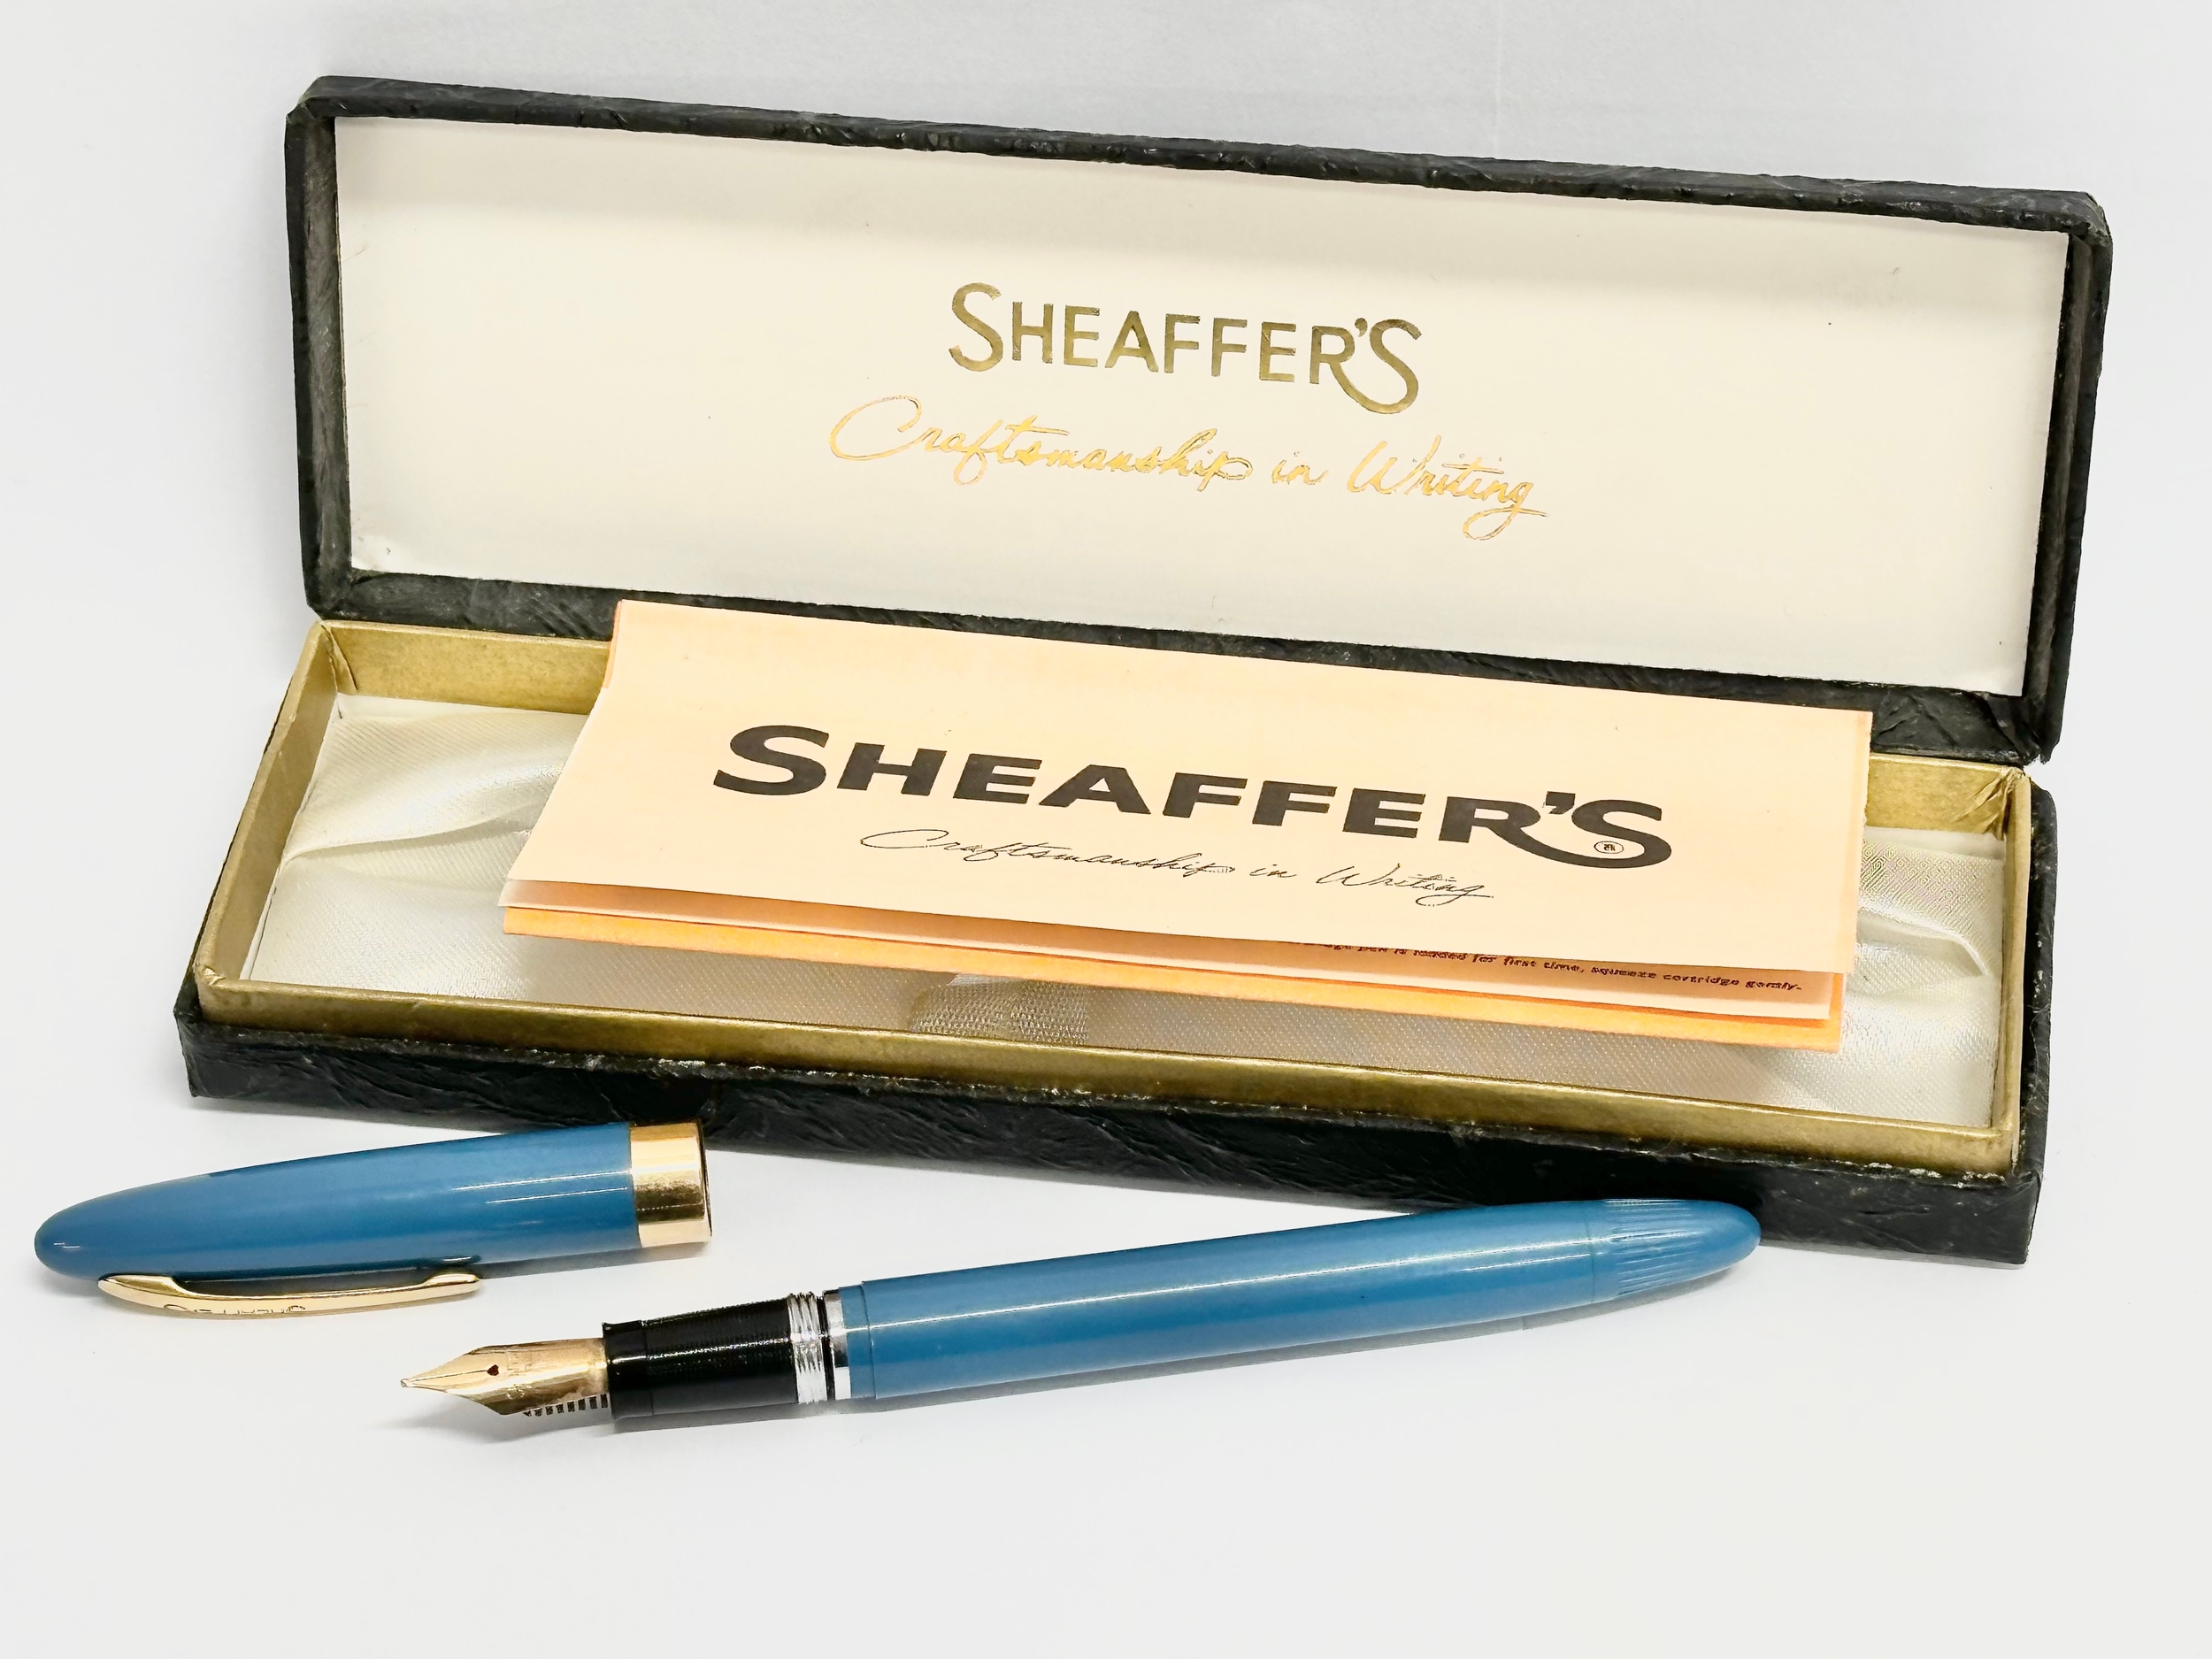 A 14k gold nip fountain pen by Sheaffer’s.